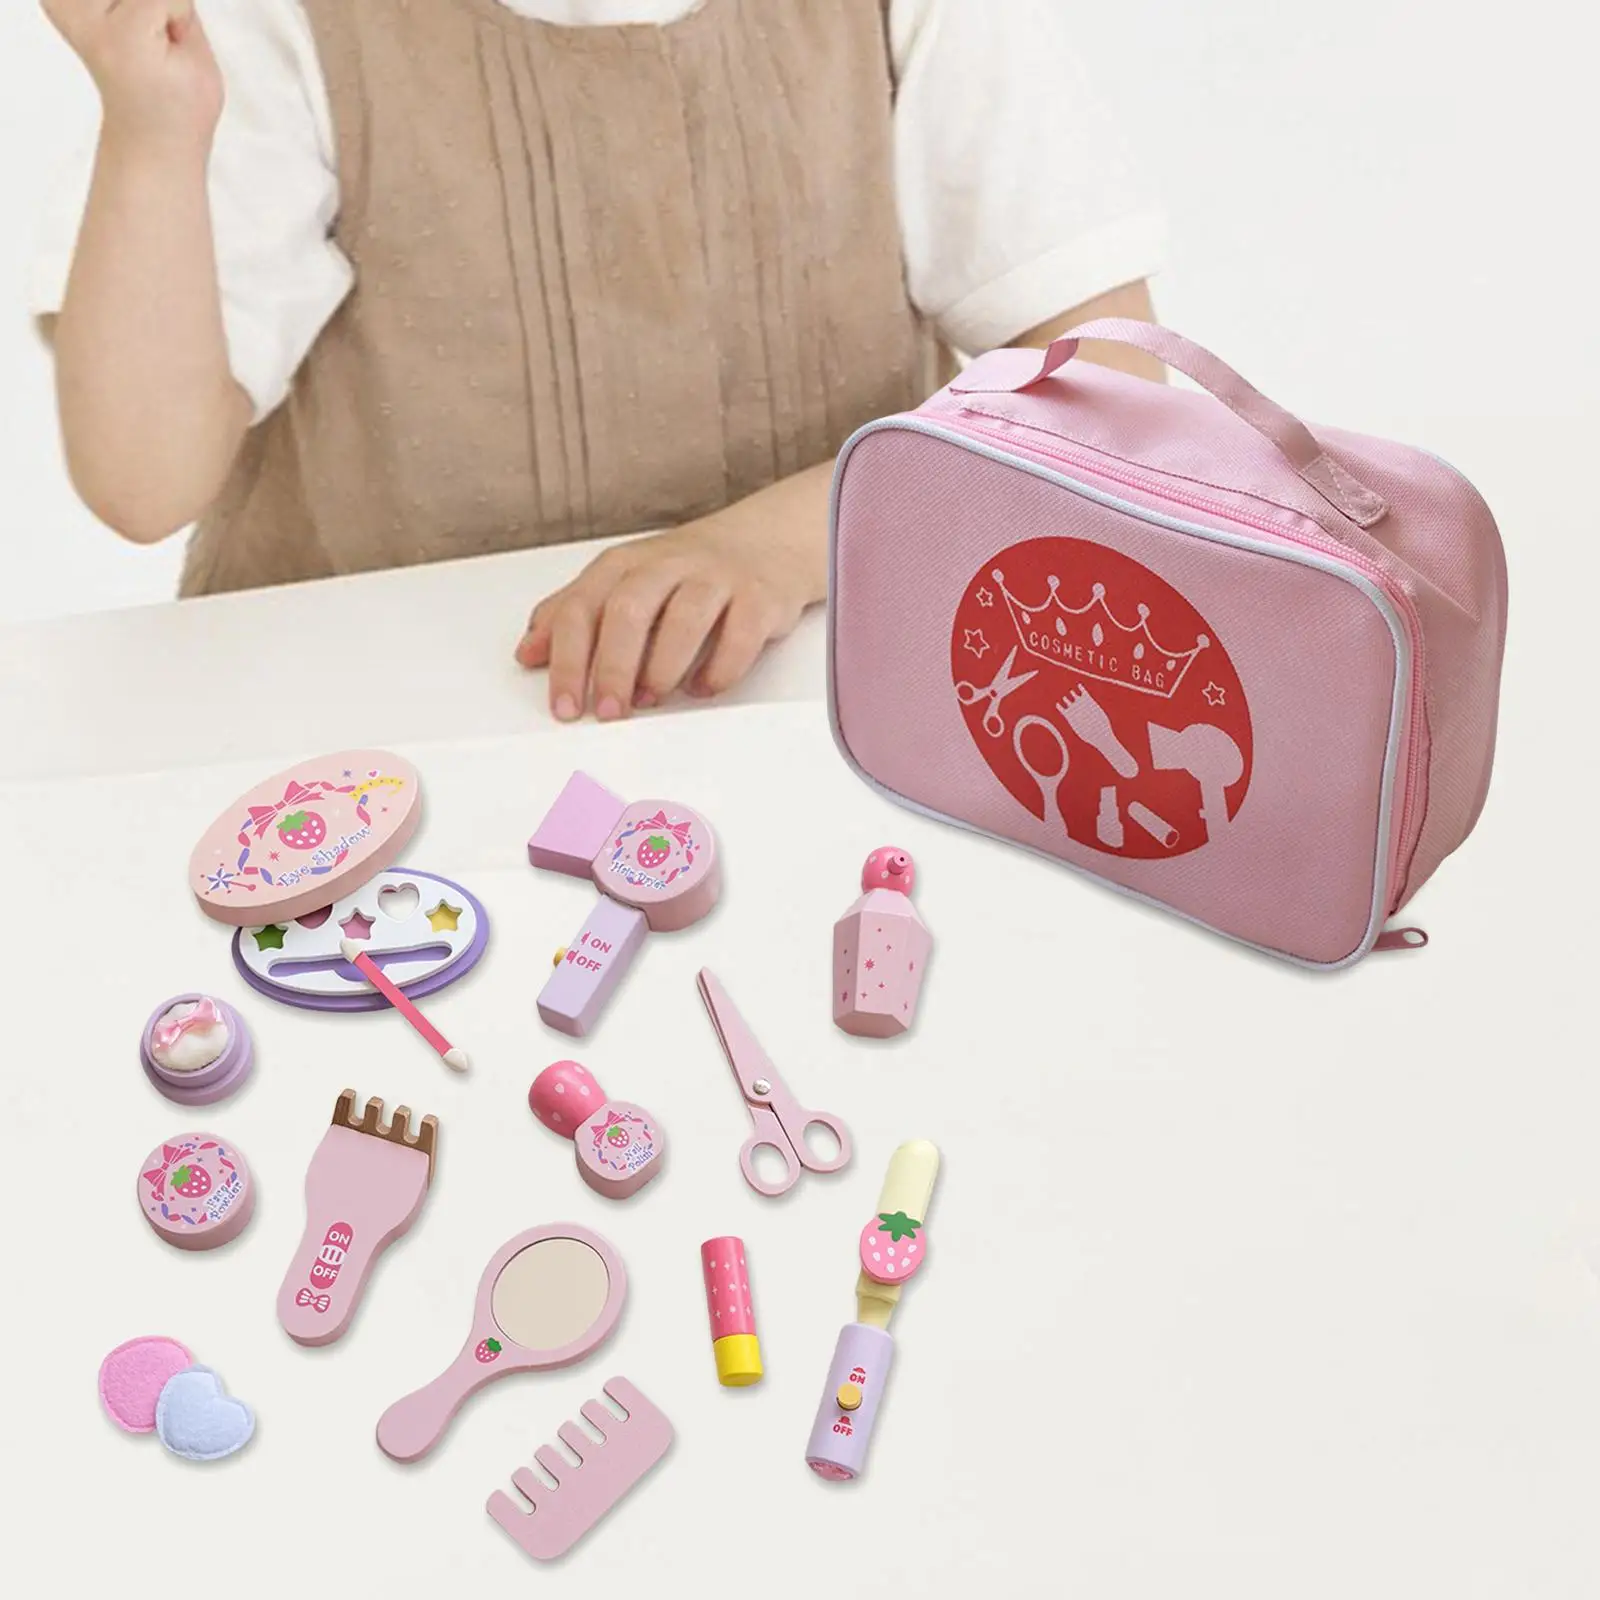 Miniature Play House Toys Set with Storage Bag Multipurpose Lifelike Pretend